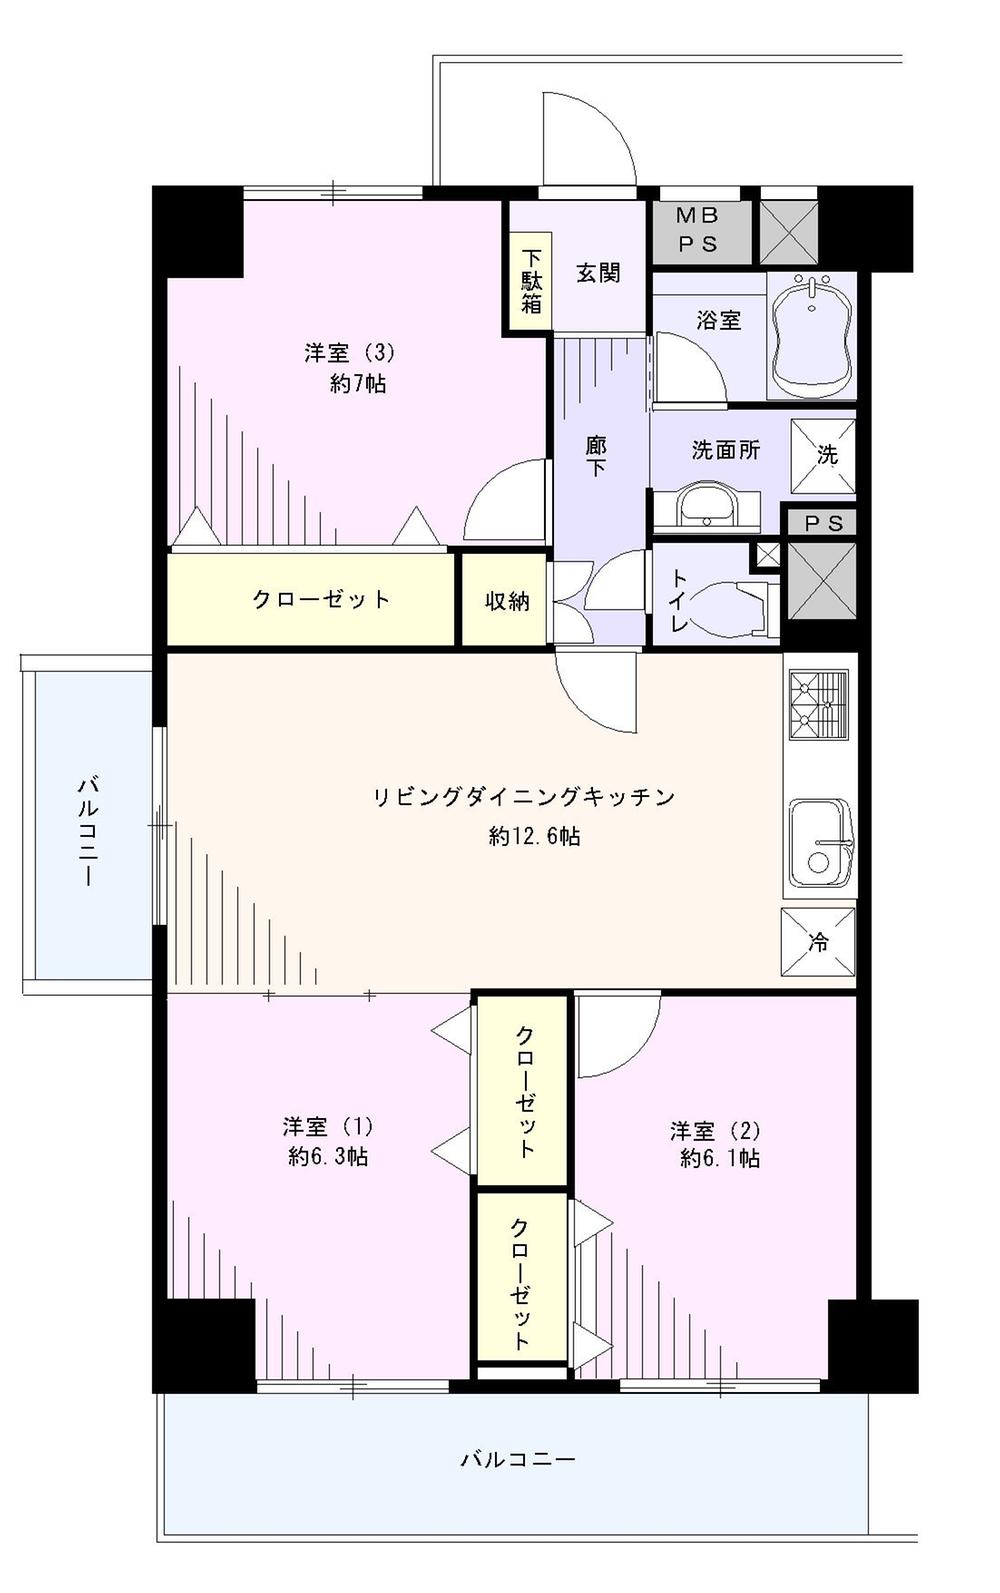 Floor plan. 3LDK, Price 24,800,000 yen, Footprint 71.5 sq m , Balcony area 11.4 sq m